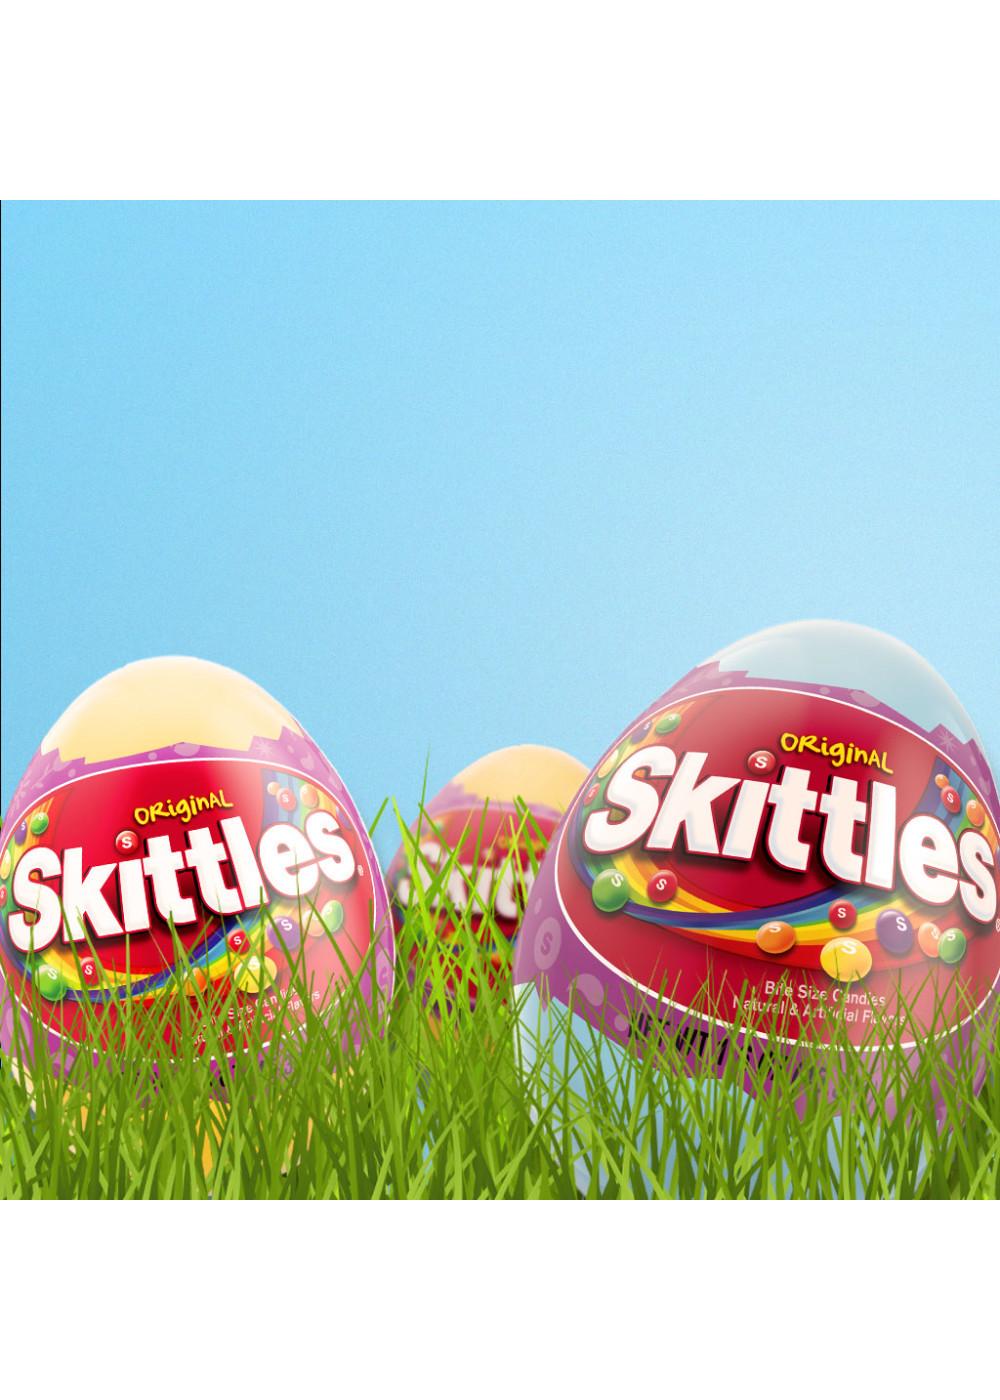 Skittles Original Candy Easter Egg; image 3 of 7